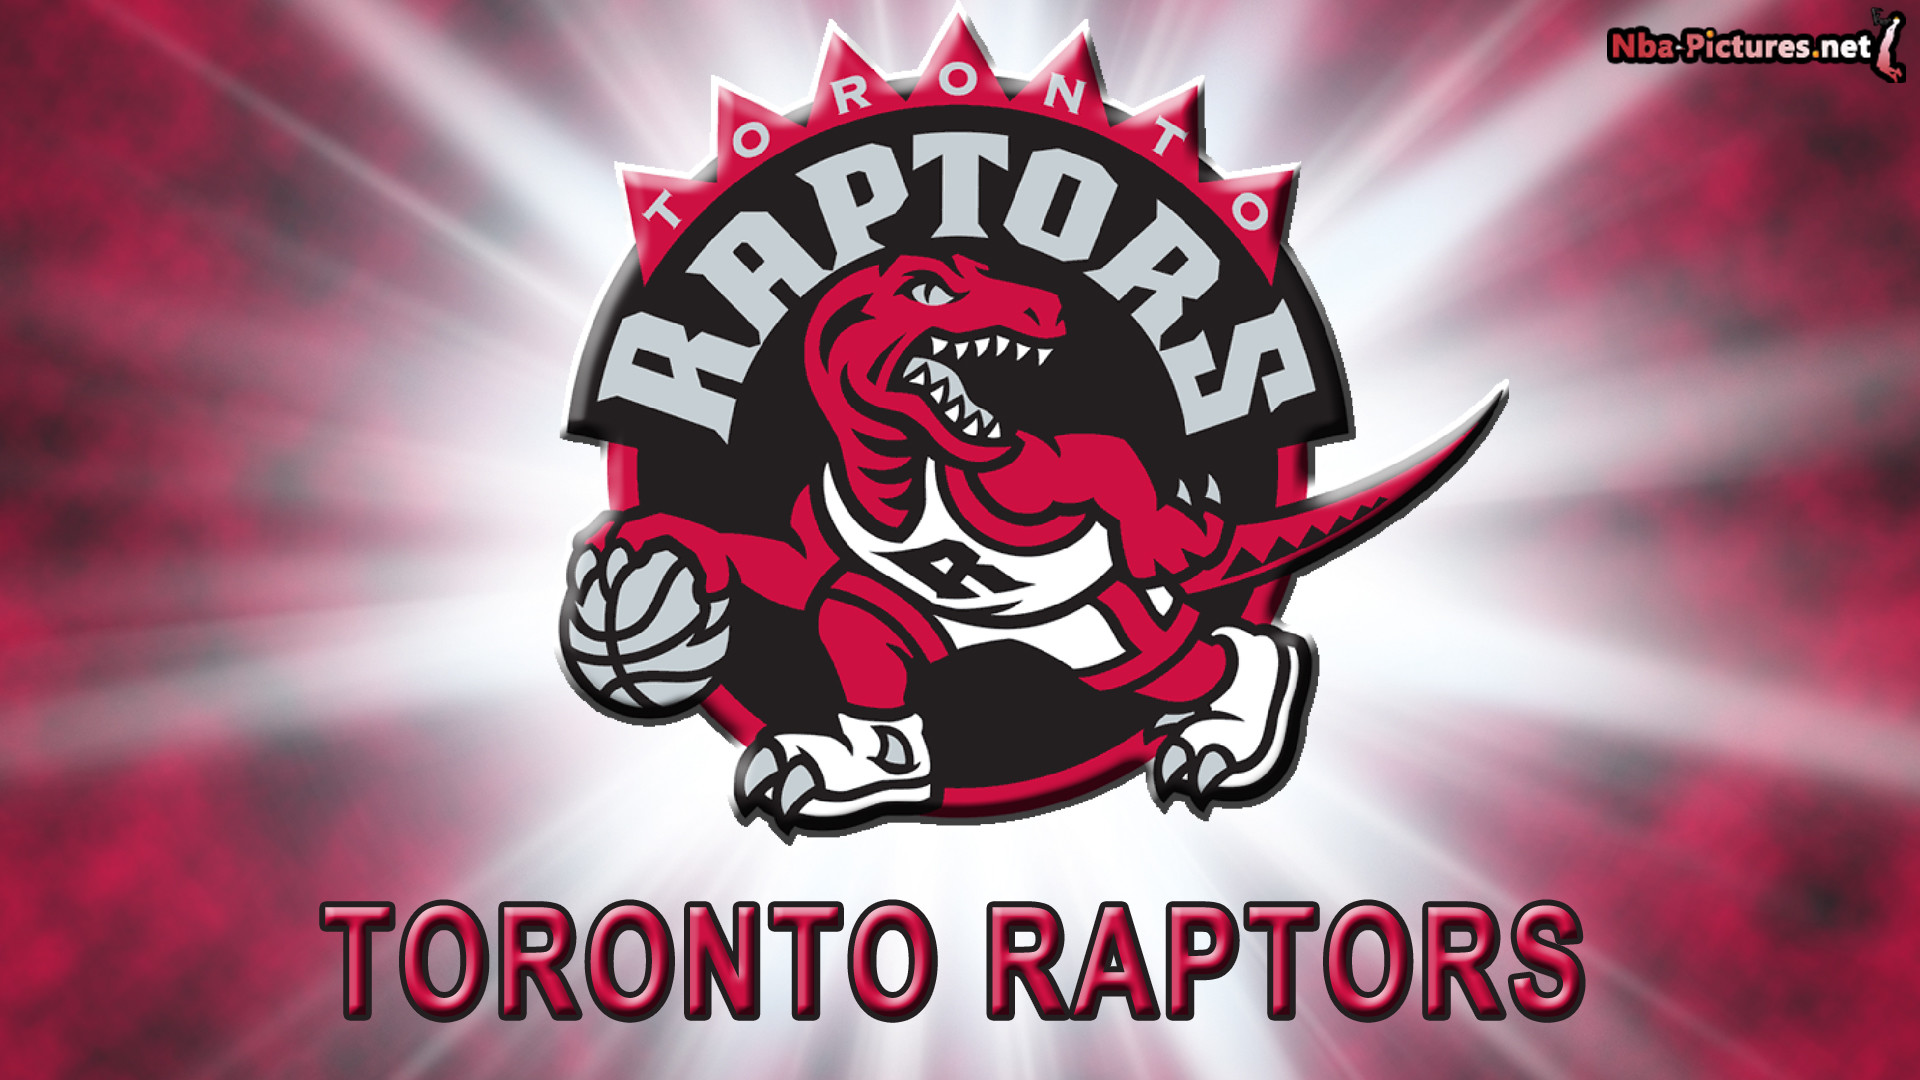 Basketball Emblem NBA Black Background HD Toronto Raptors Wallpapers  HD  Wallpapers  ID 79167